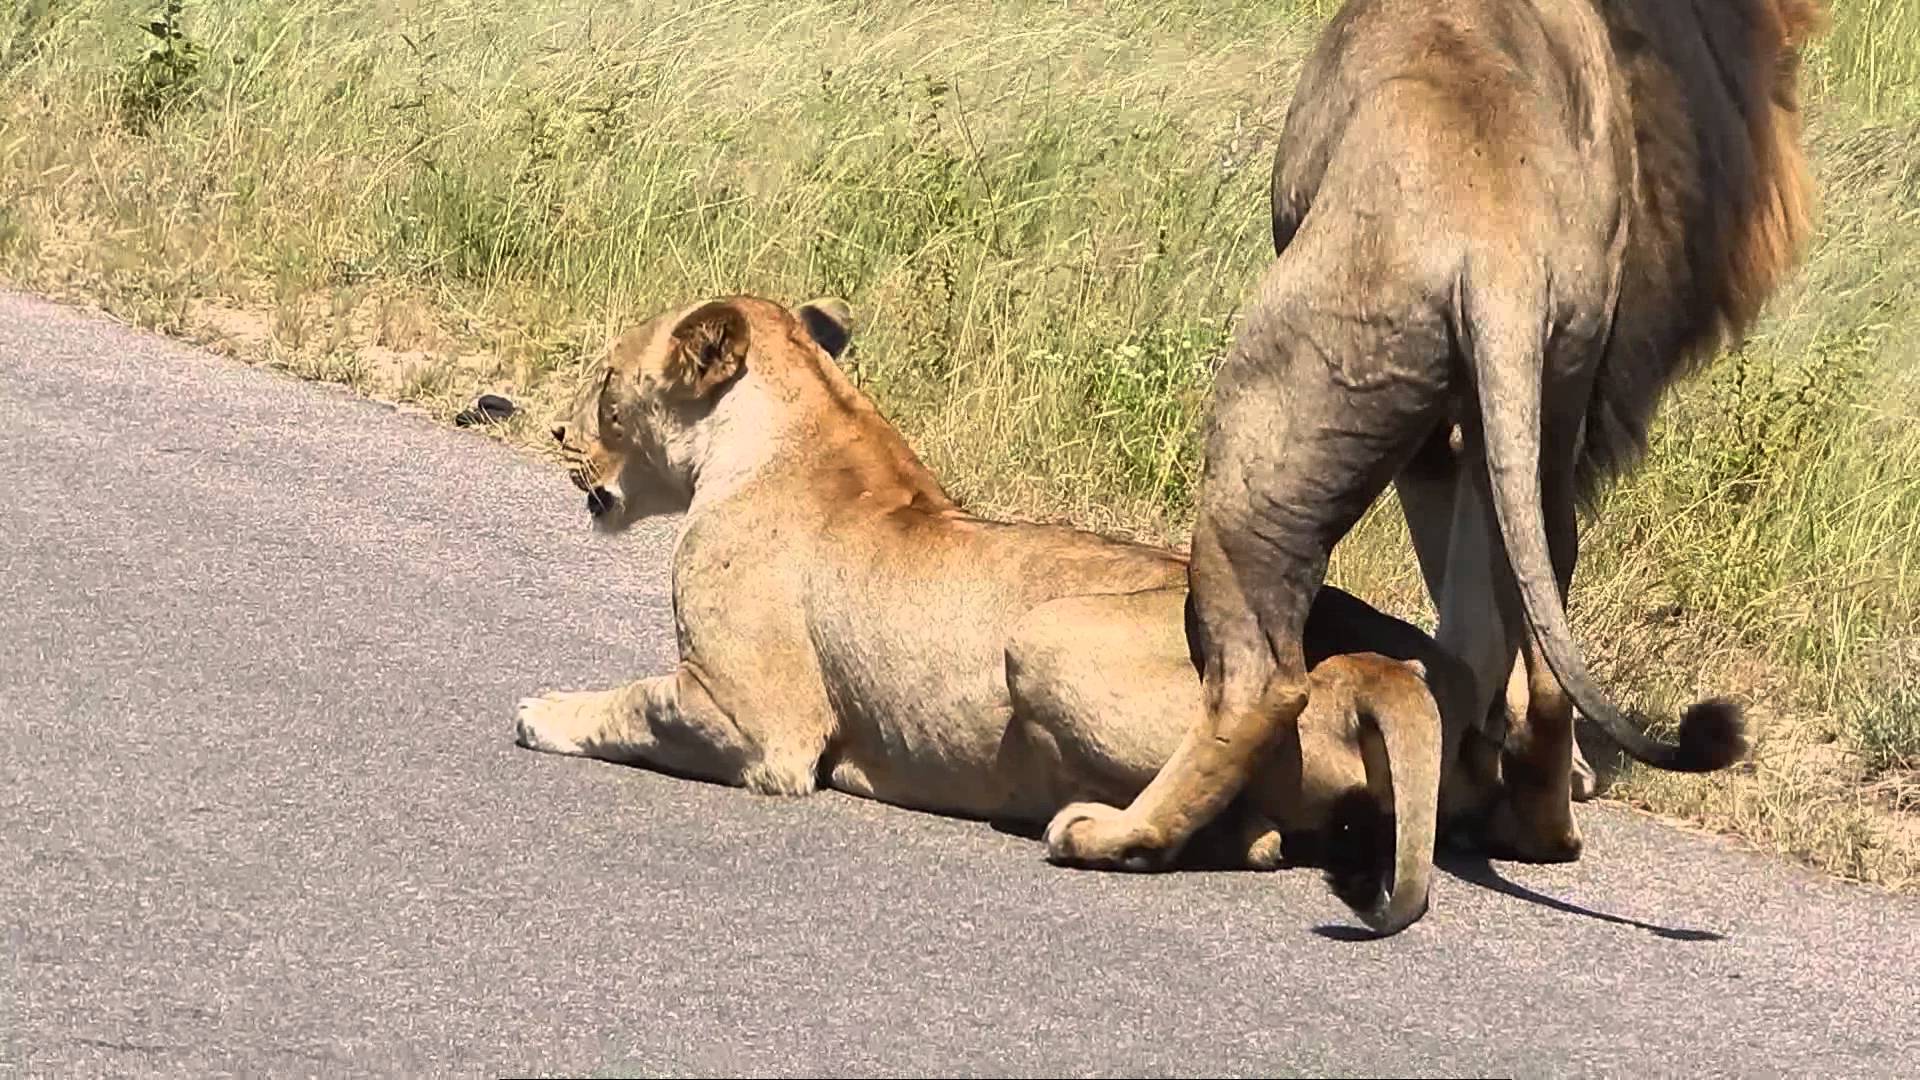 How To Xxx With Lion - kruger national park lion porn youtube - XXXPicz